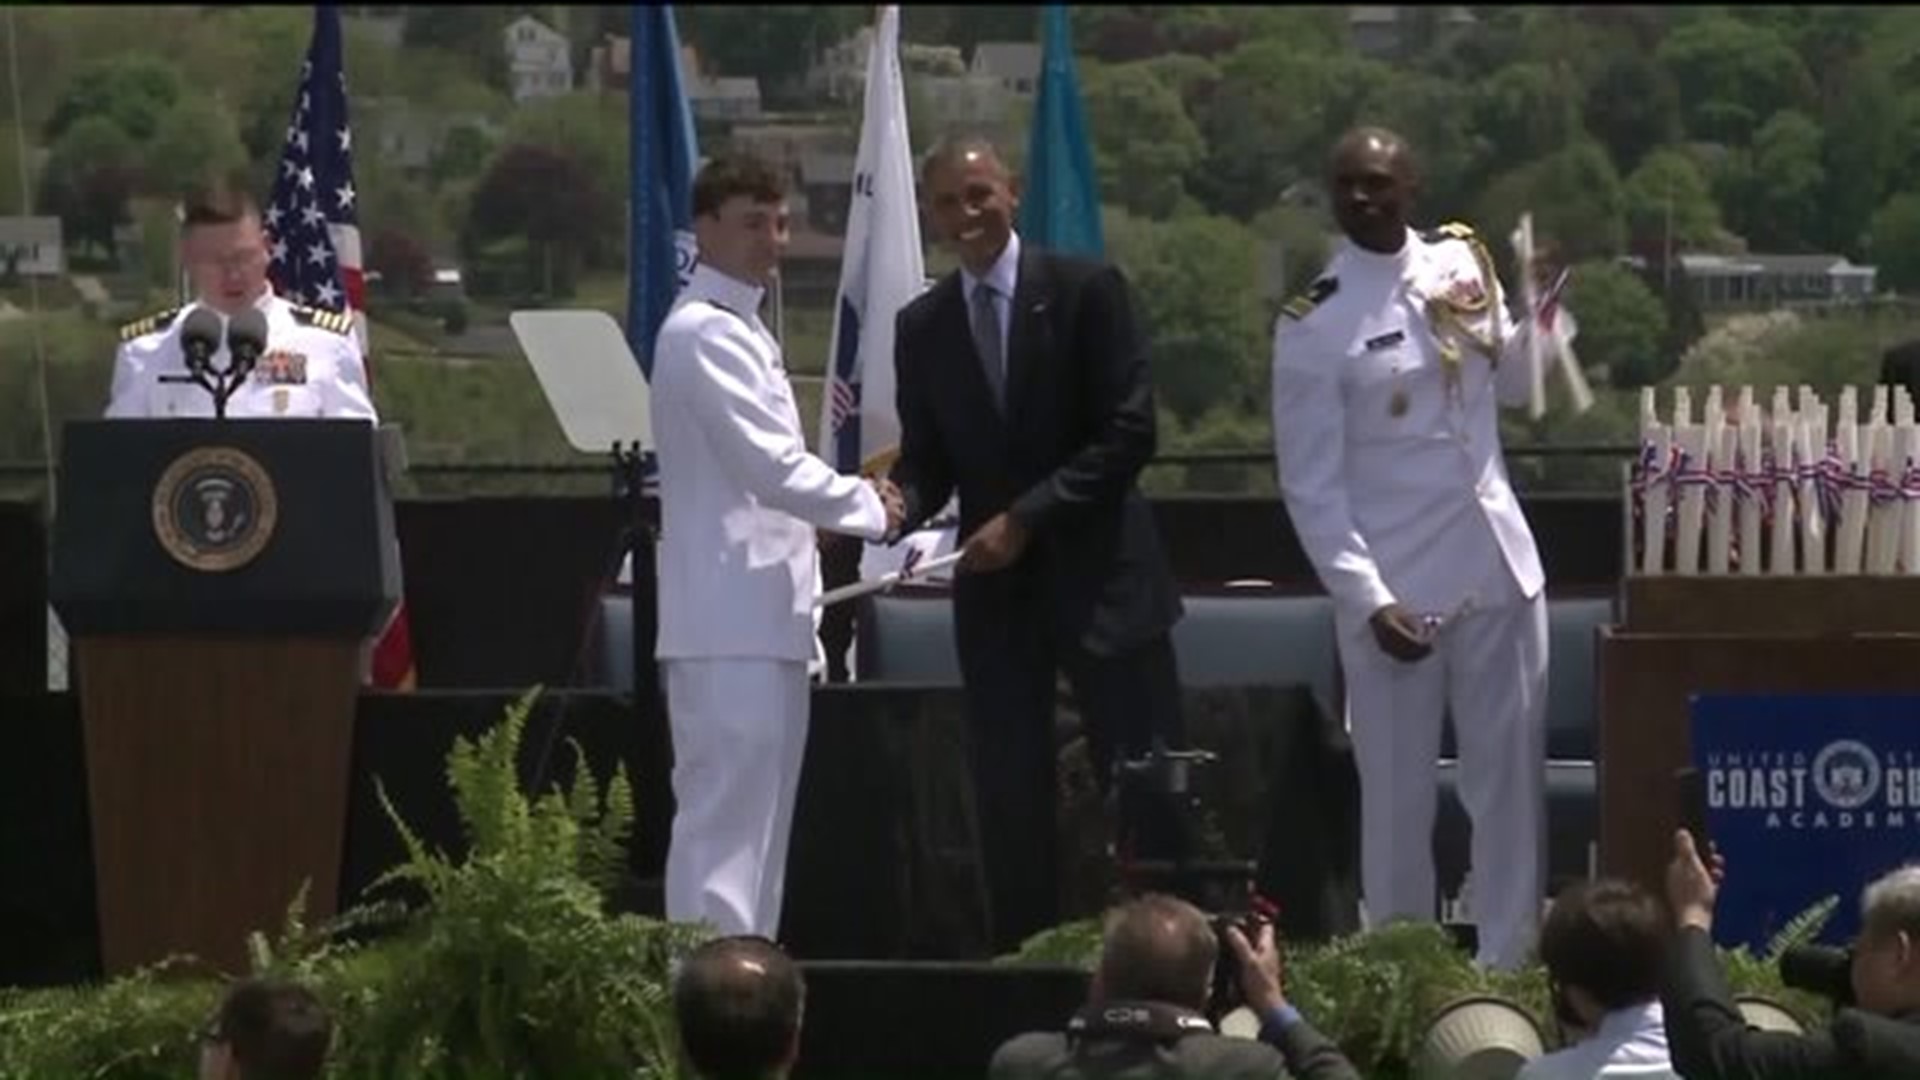 President Obama speaks at Coast Guard Academy graduation